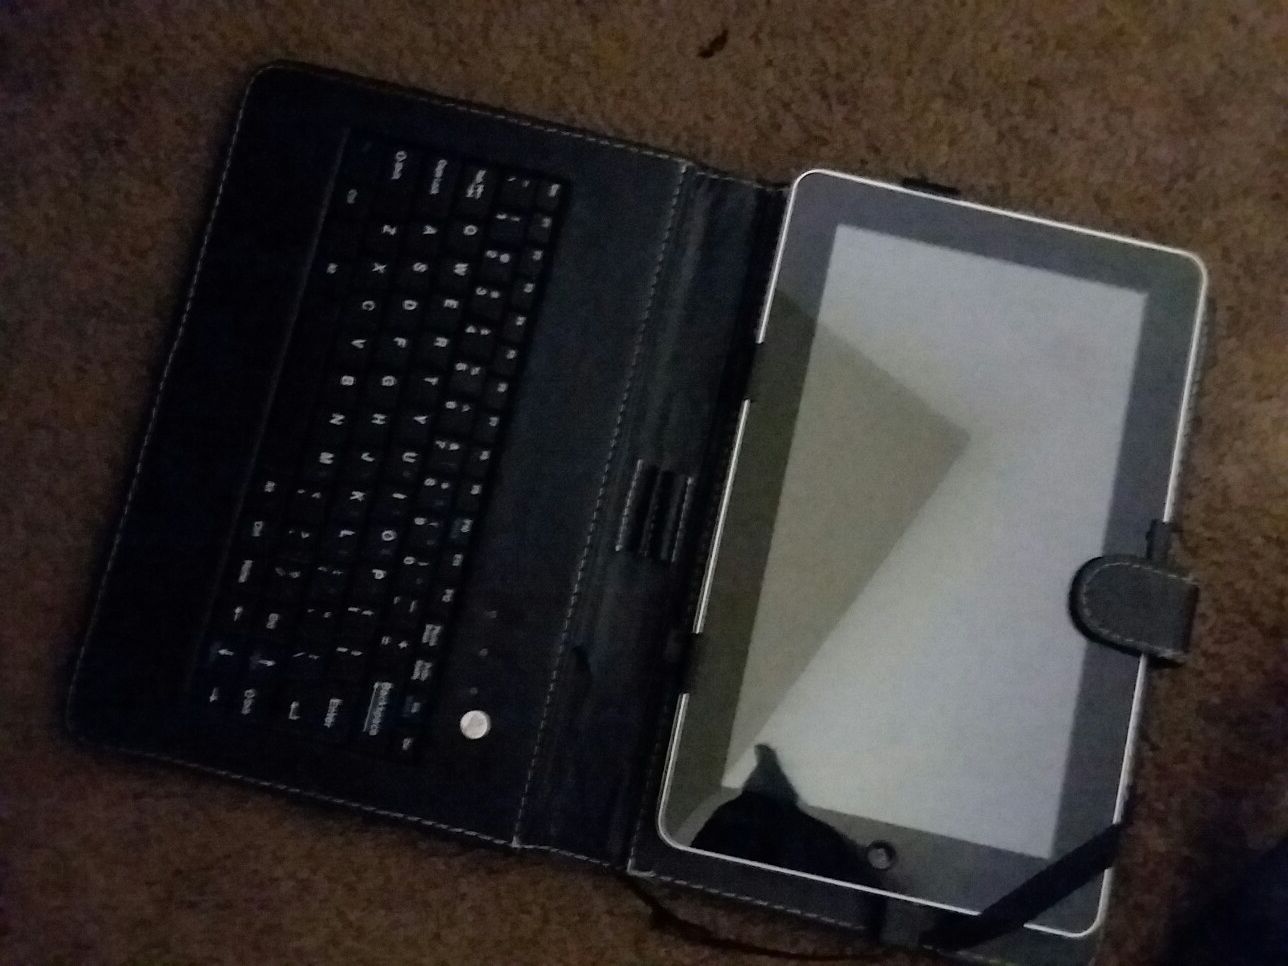 Hugh tablet with keyboard